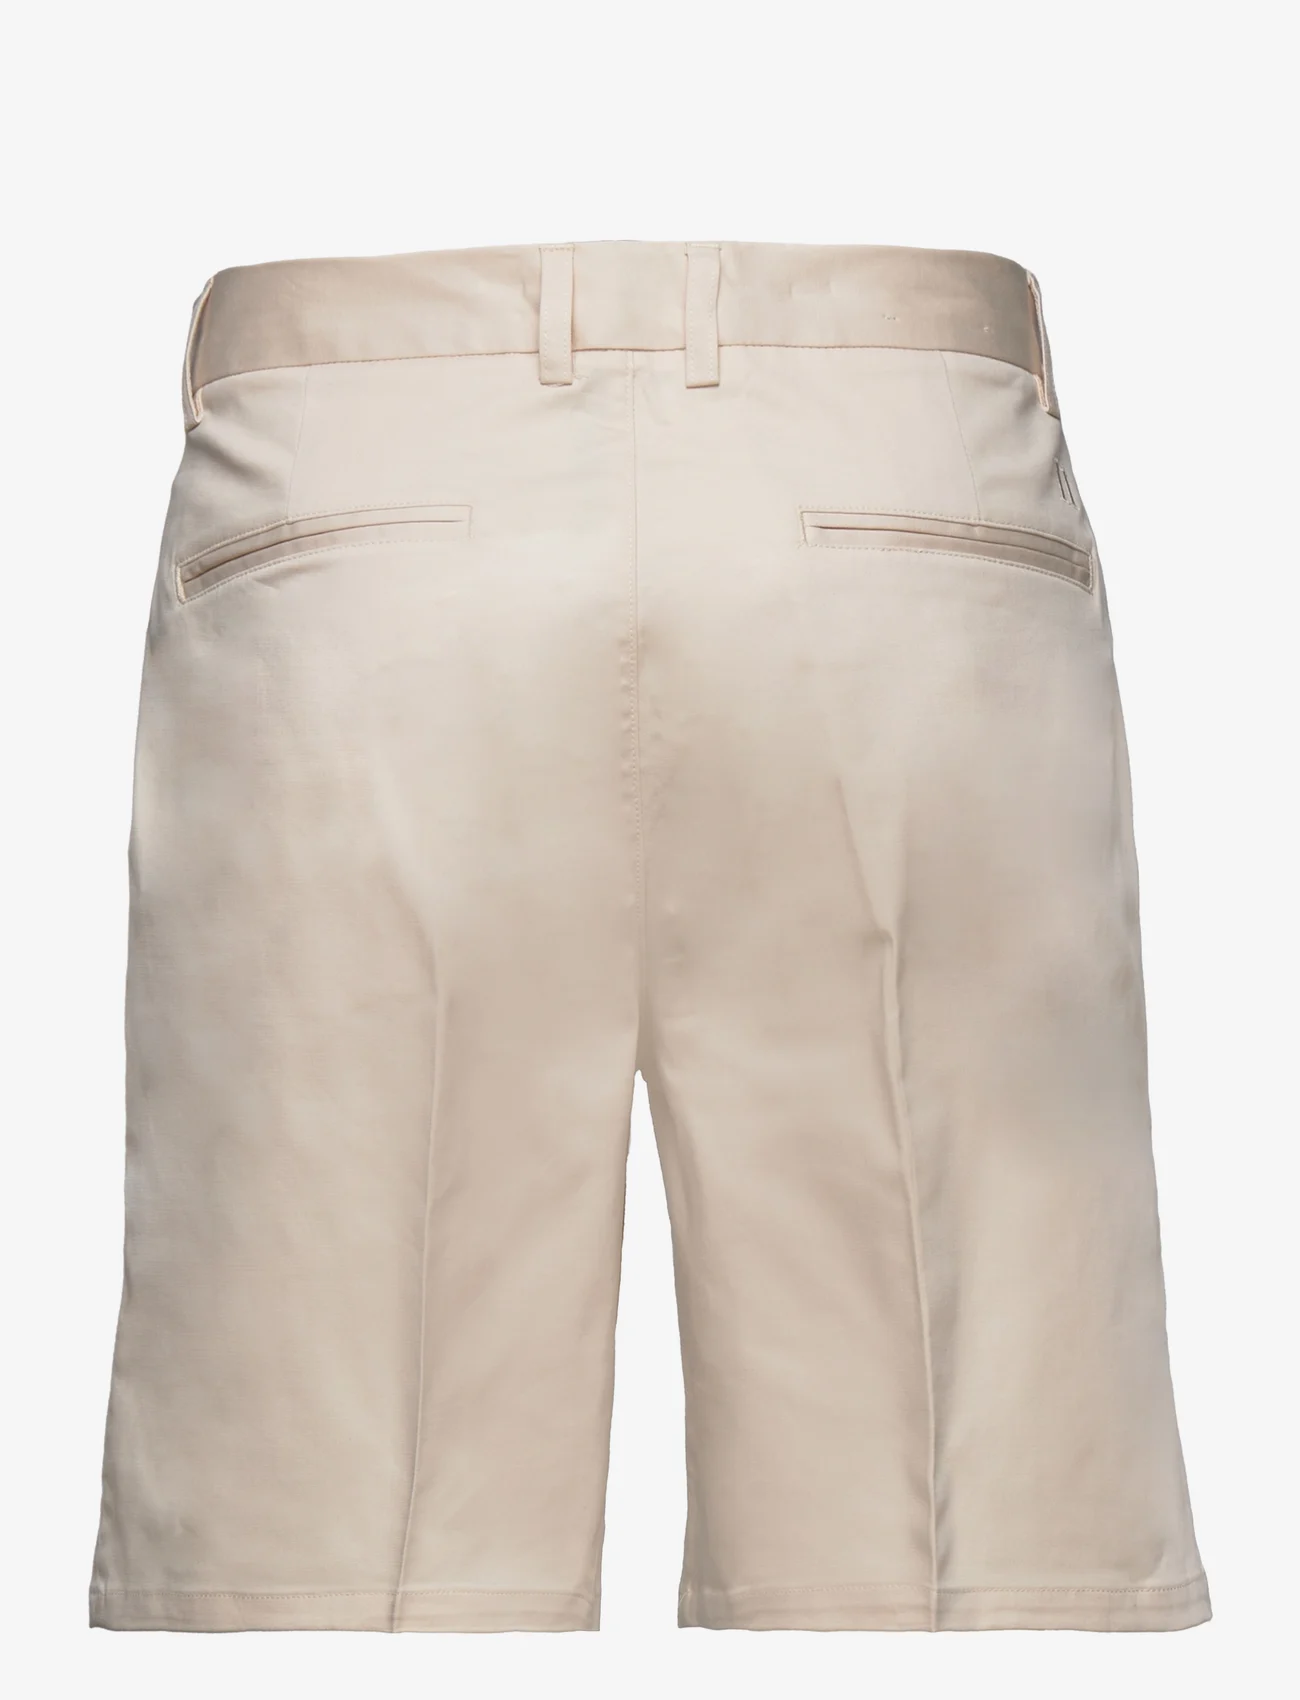 Les Deux - Como Reg Cotton-Linen Shorts - chino lühikesed püksid - ivory - 1